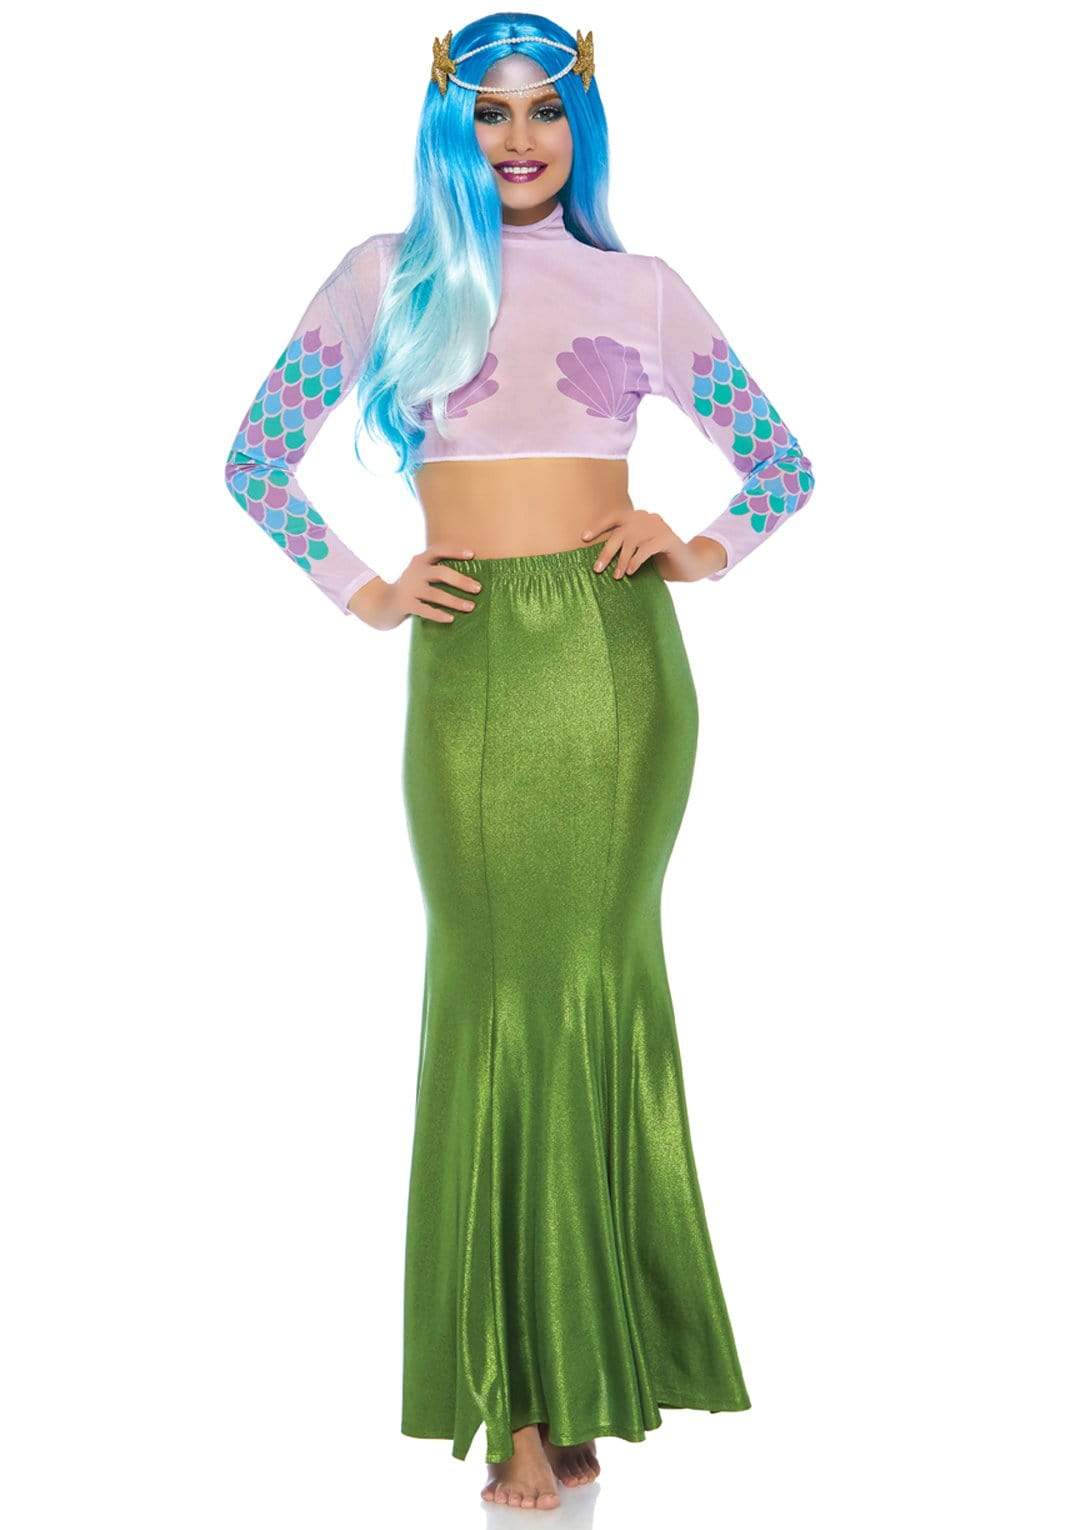 Ariel Costume Long Sleeves Ariel Leggings for Girls Size 2T,3T,4,5